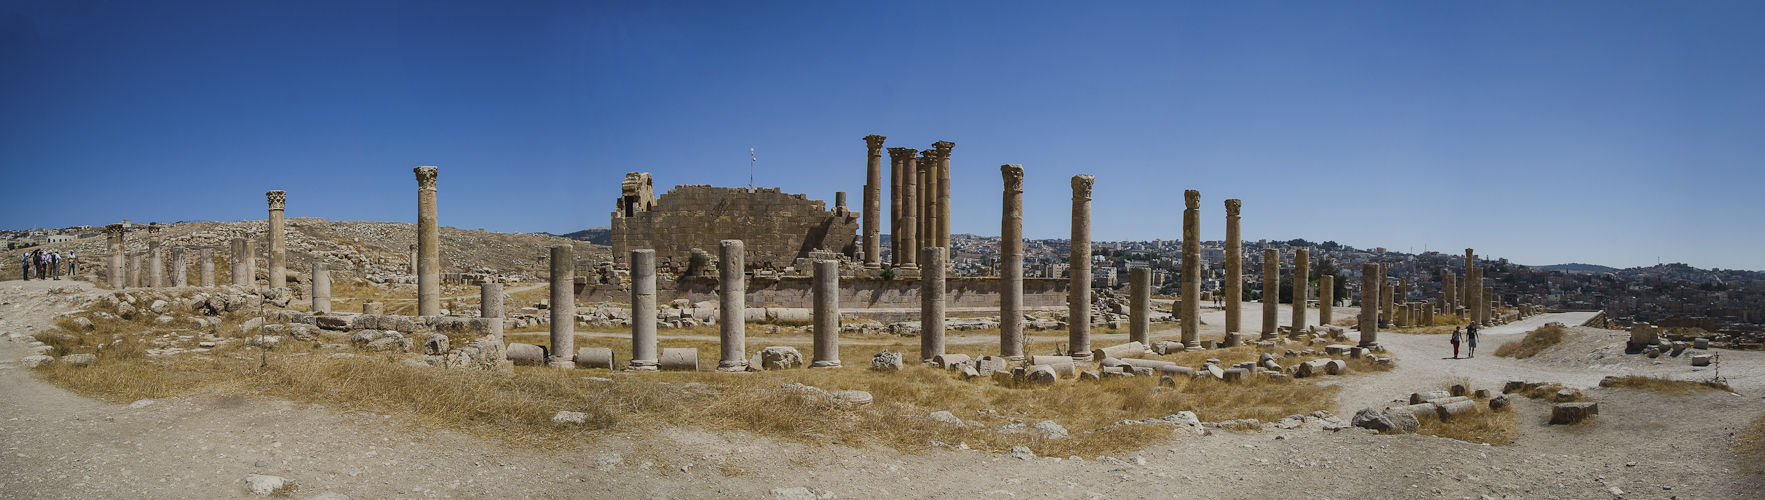 Panorama des Artemis-Tempels von Jerash (Jordanien)